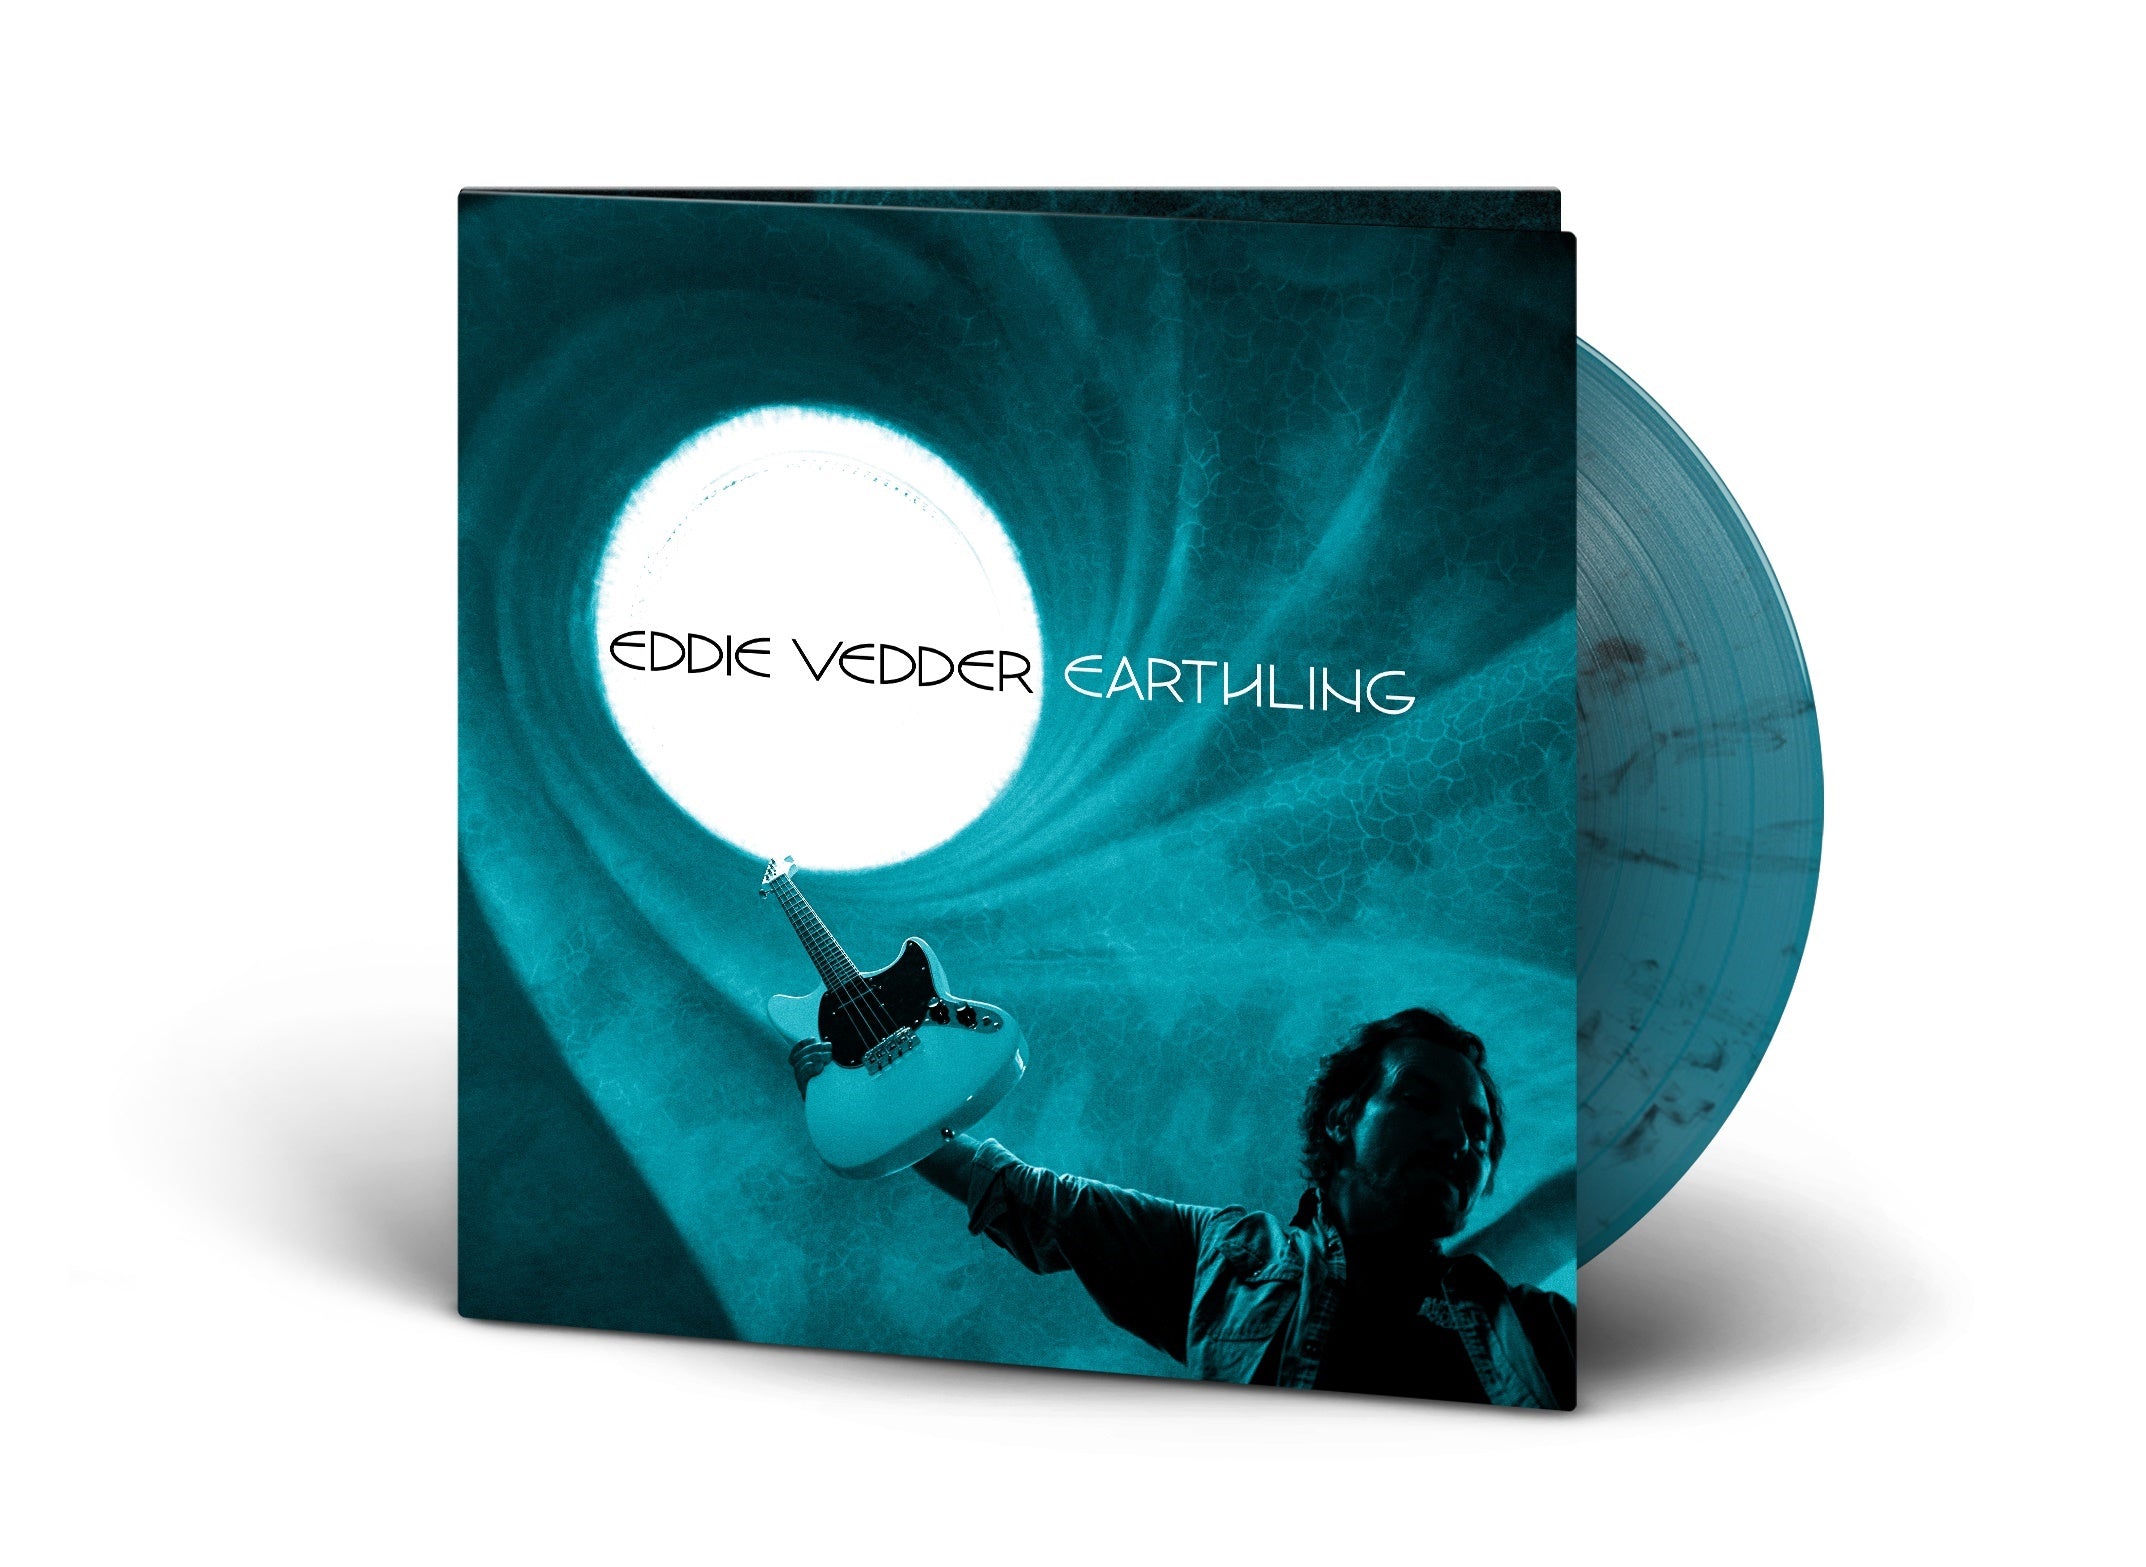 Eddie Vedder | Earthling [Explicit Content] Clear Vinyl, Blue, Black, Gatefold LP Jacket) | Vinyl